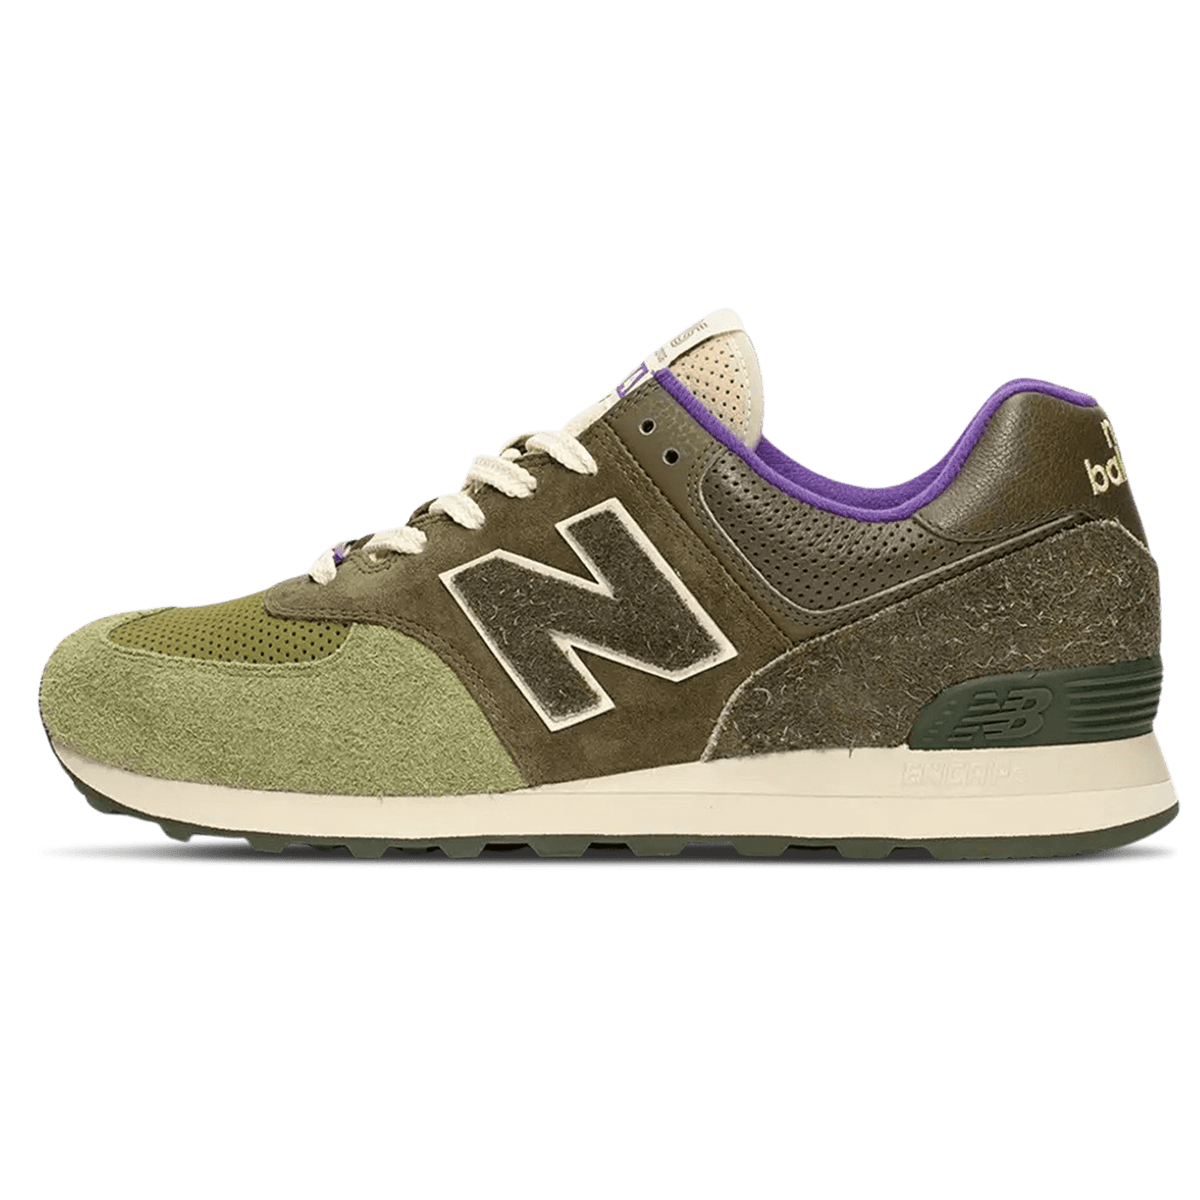 New Balance x Sneakersnstuff 574 'Nature' - Kick Game